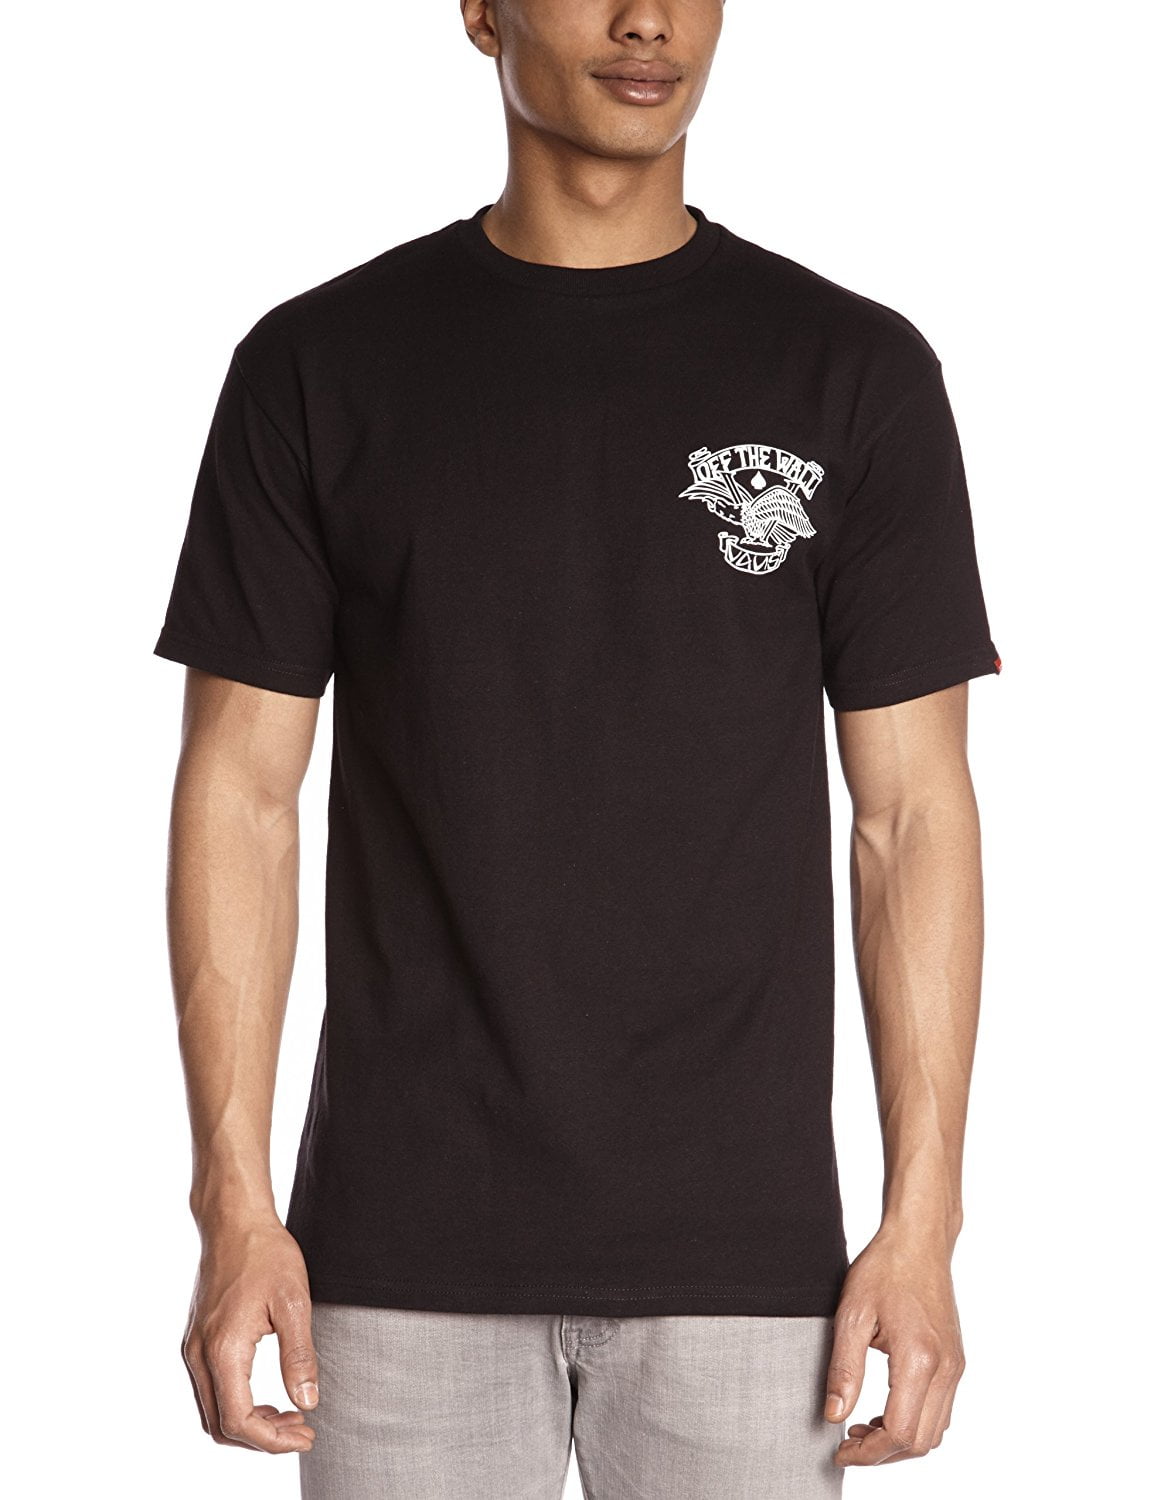 Vans - Vans Baldy Men's Black Skate T-Shirt Size M - Walmart.com ...